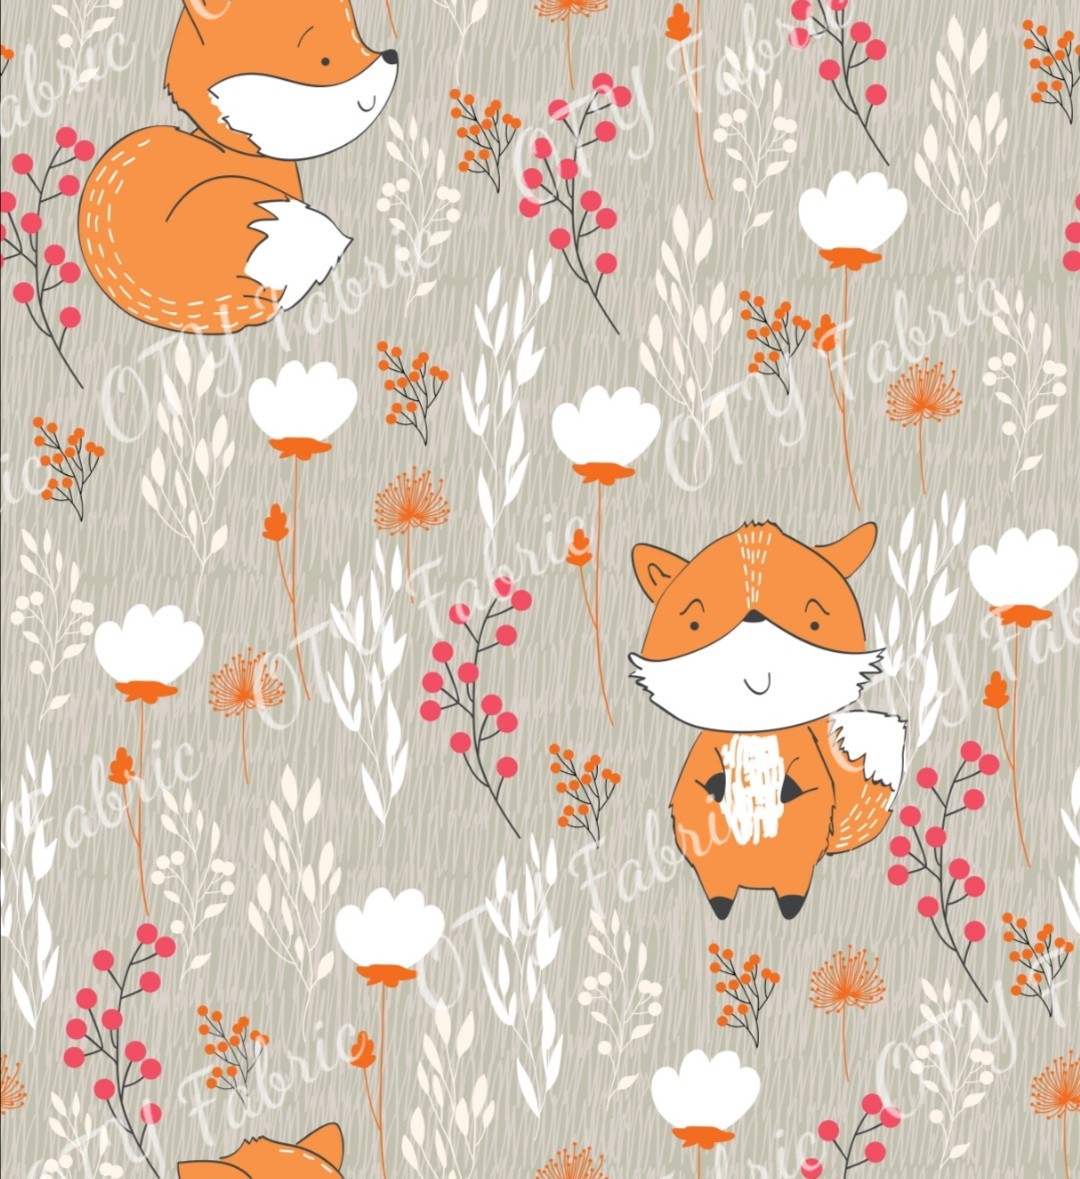 Springtime foxes